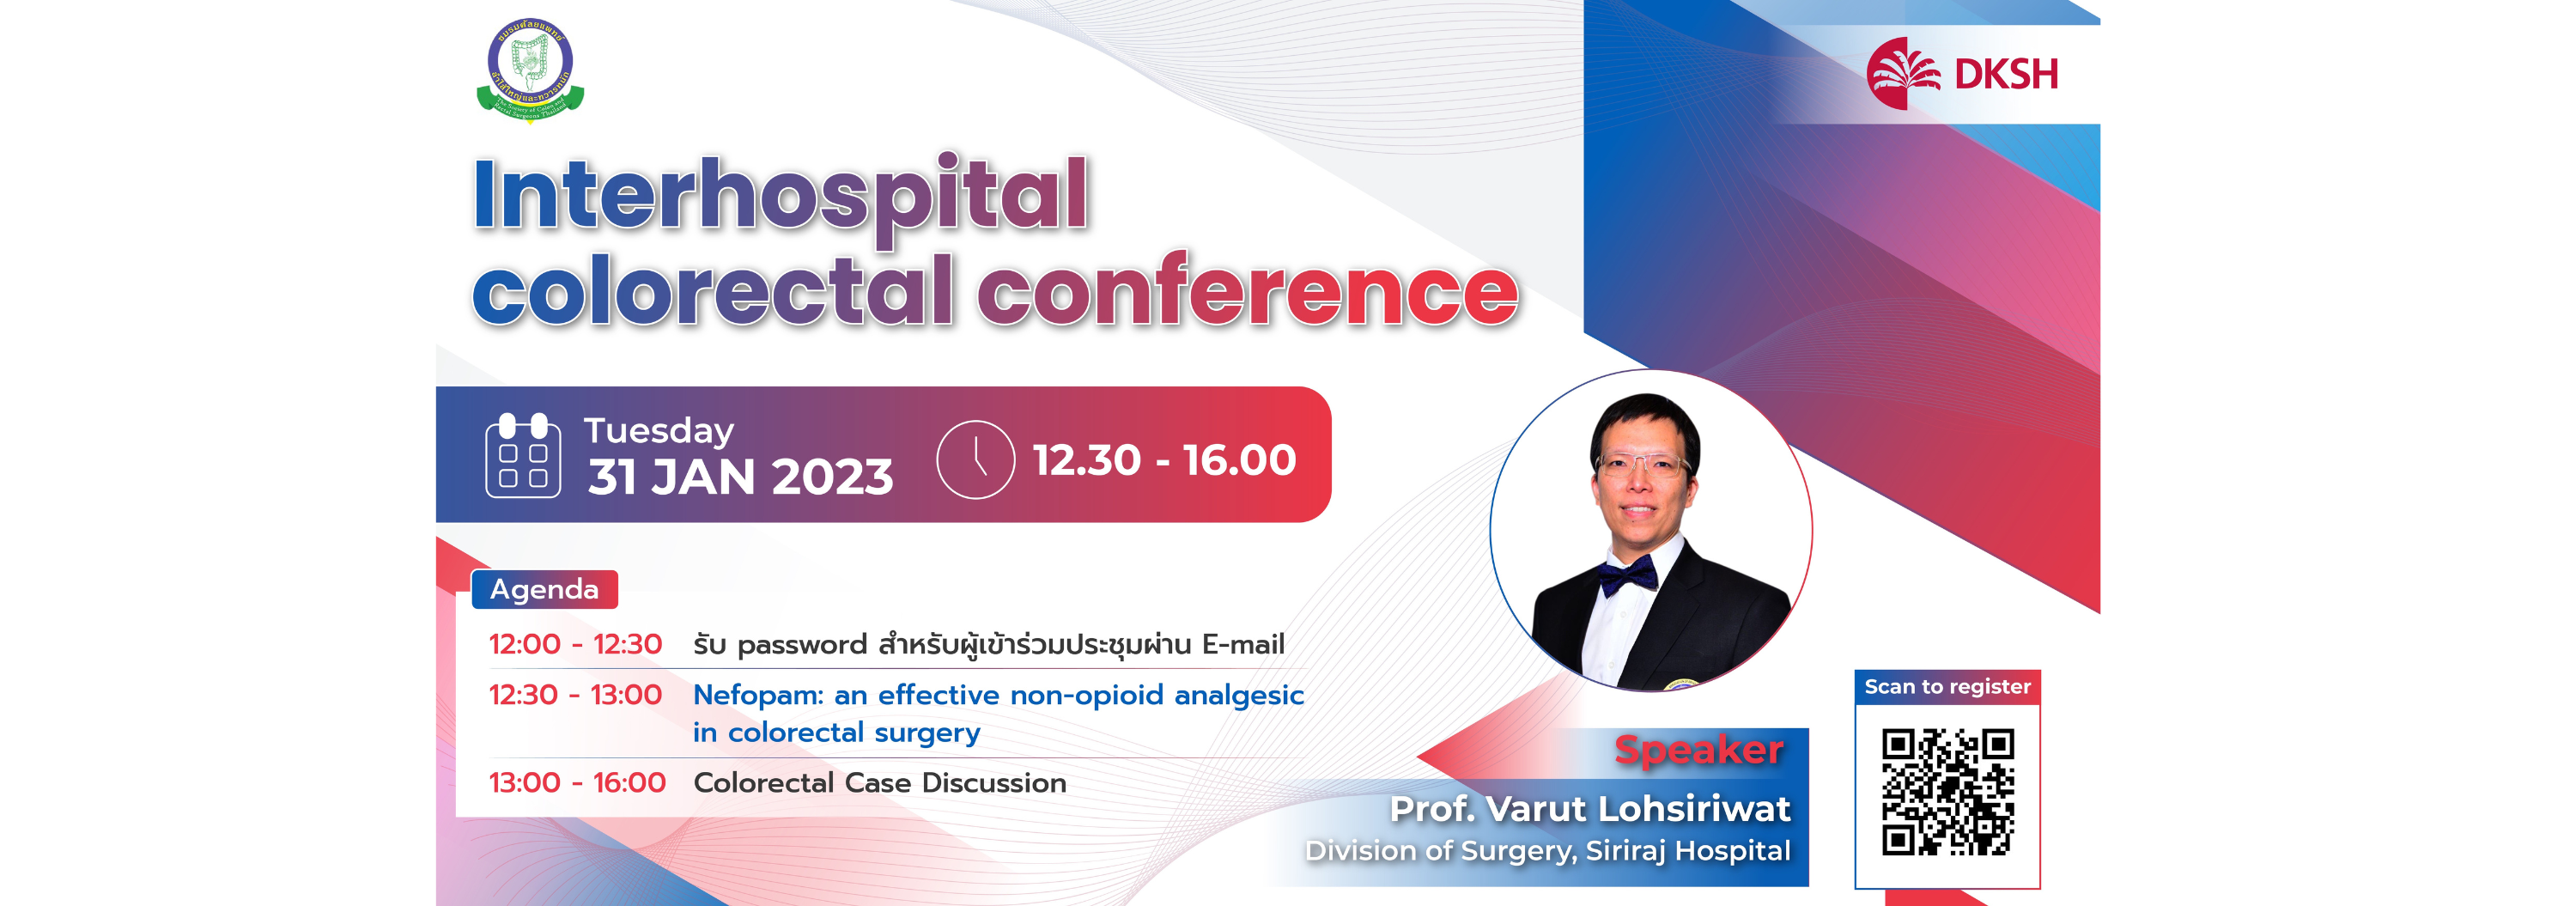 Interhospital colorectal conference